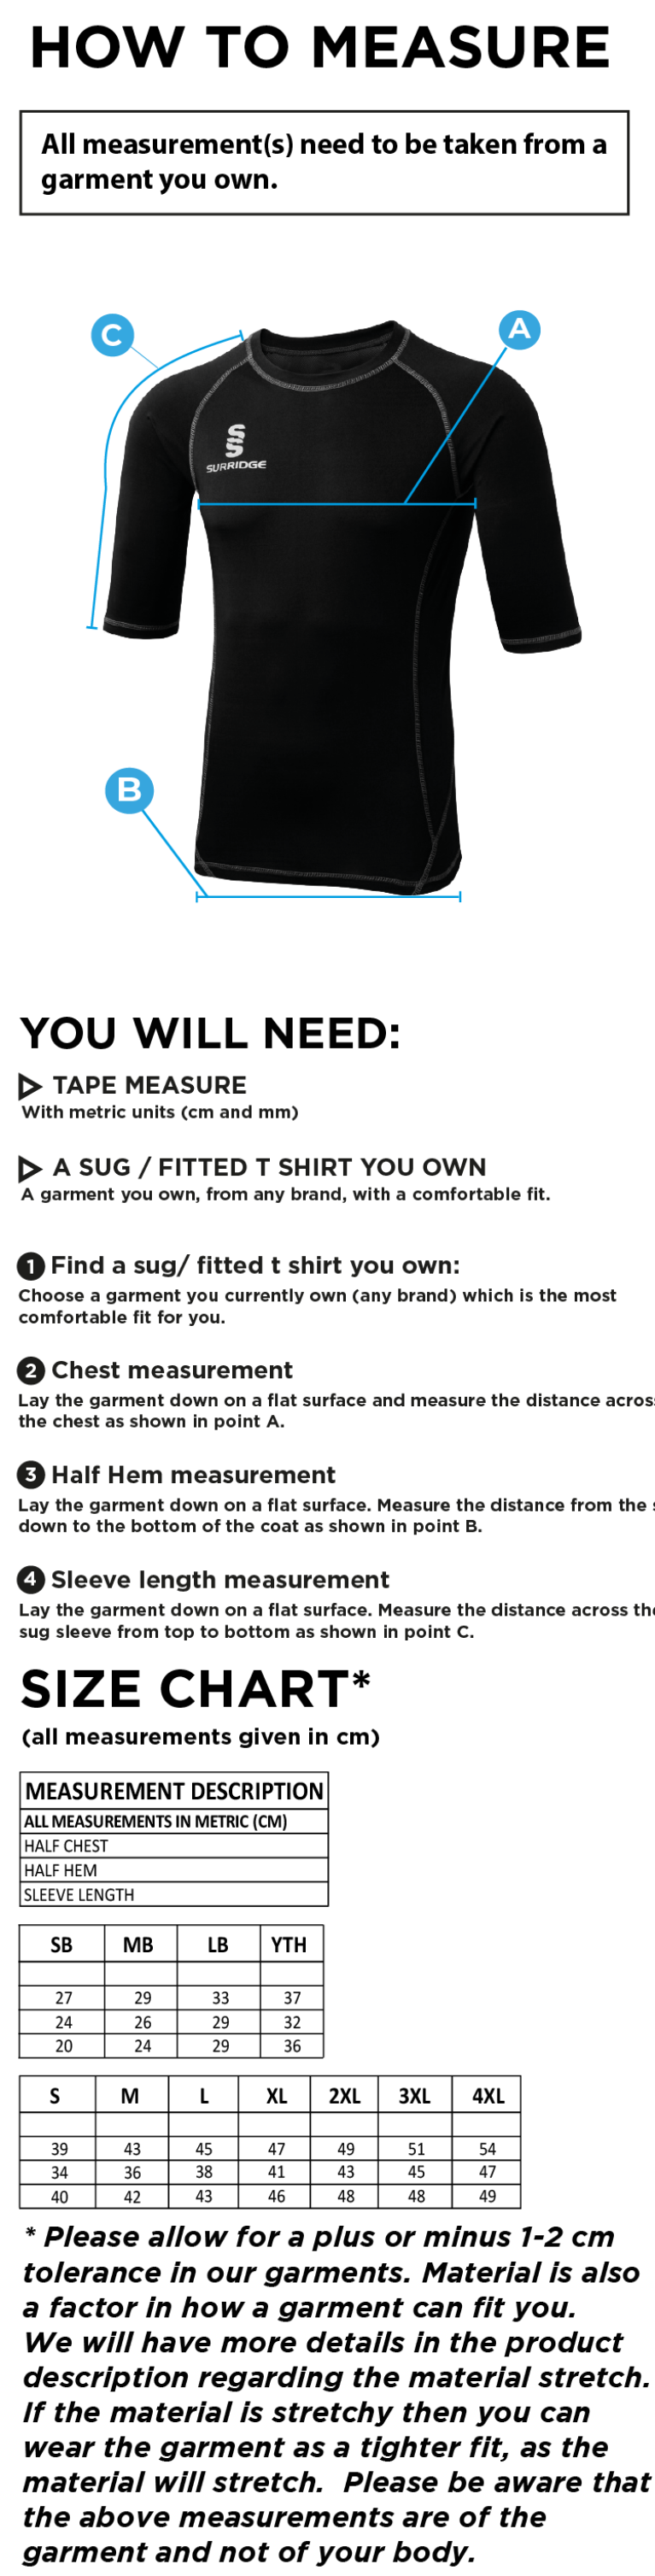 Rossendale Harriers Short Sleeve Undergarment - Size Guide